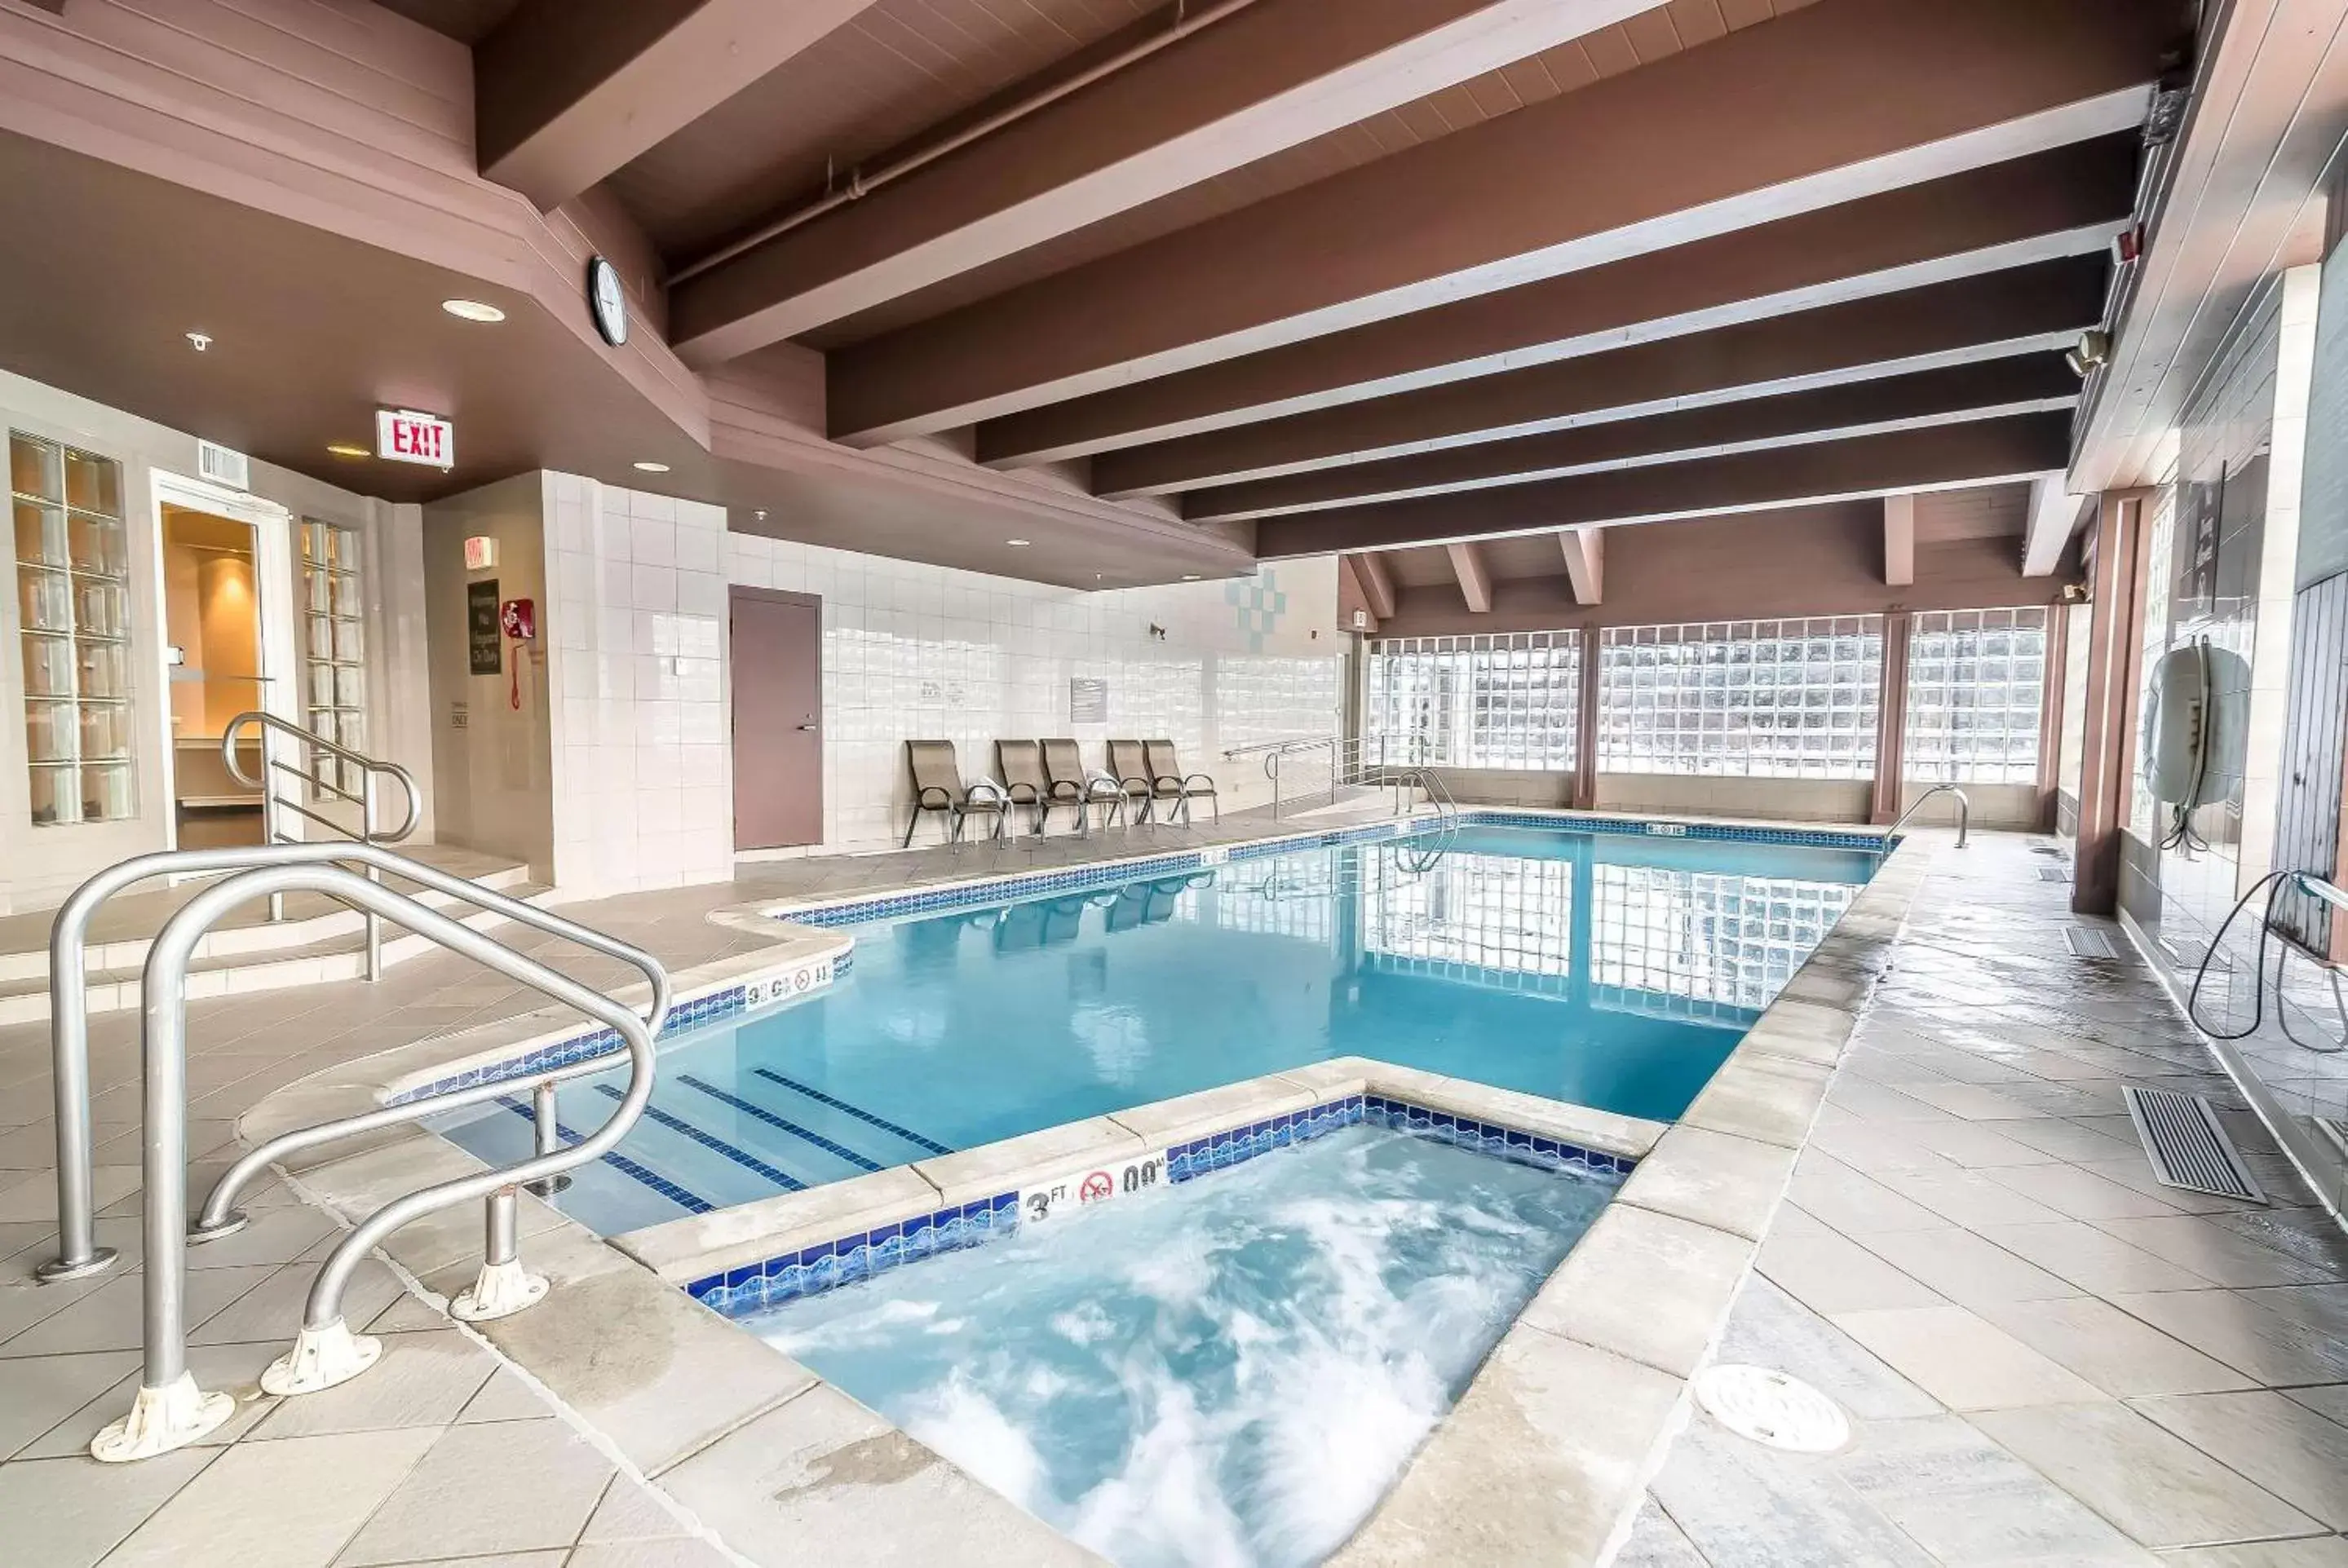 Swimming Pool in Comfort Inn Concord